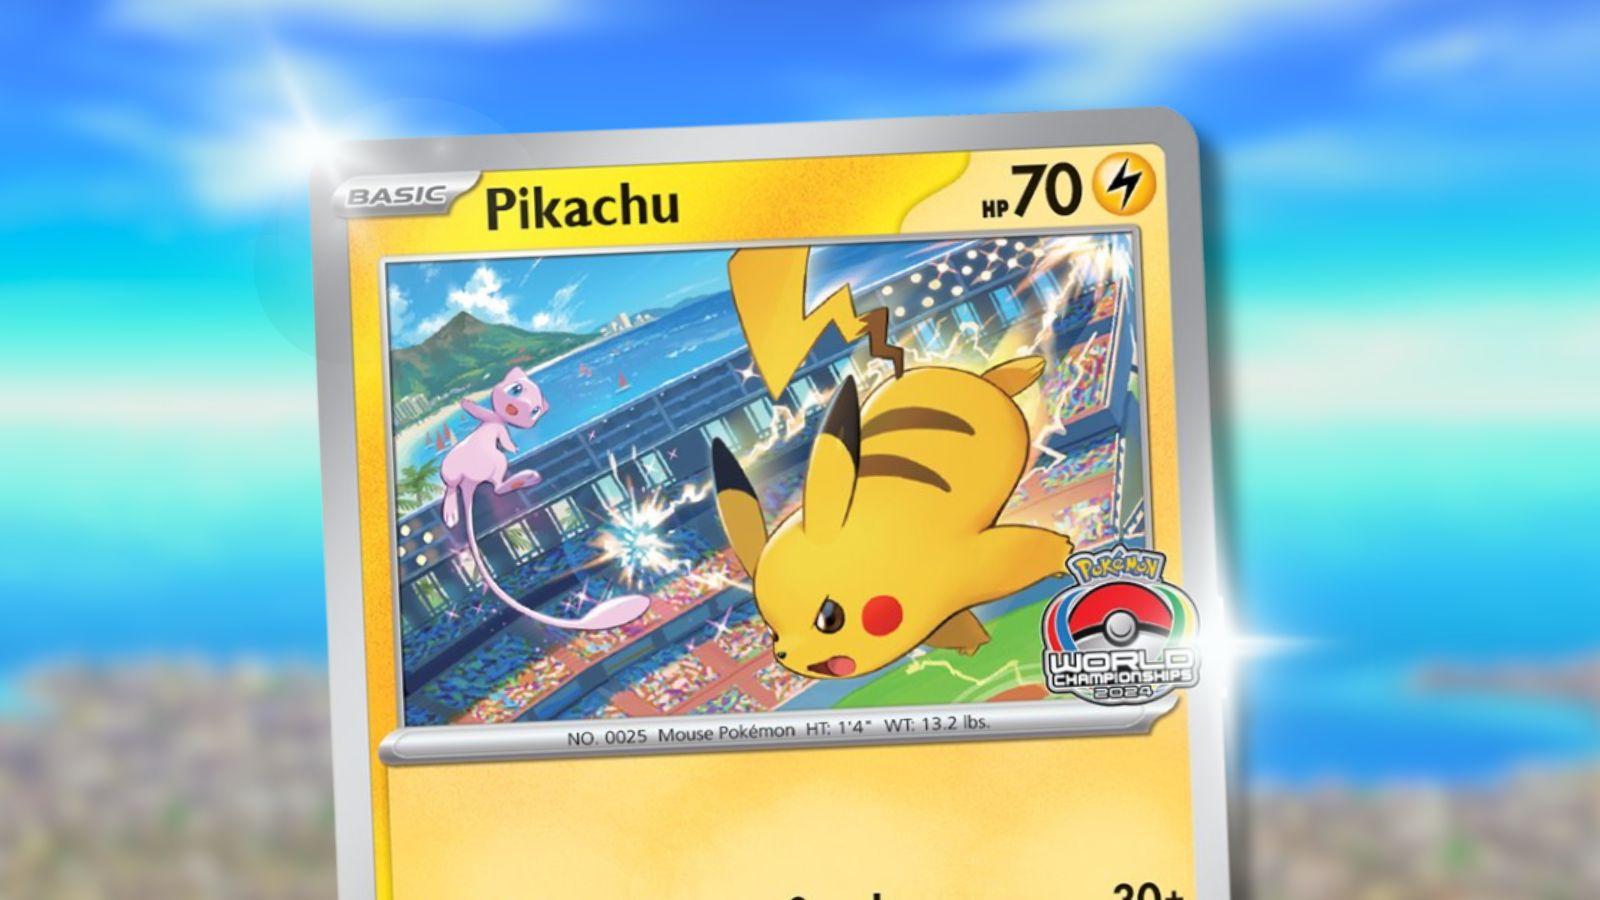 Pikachu Worlds 2024 Pokemon card with anime background.